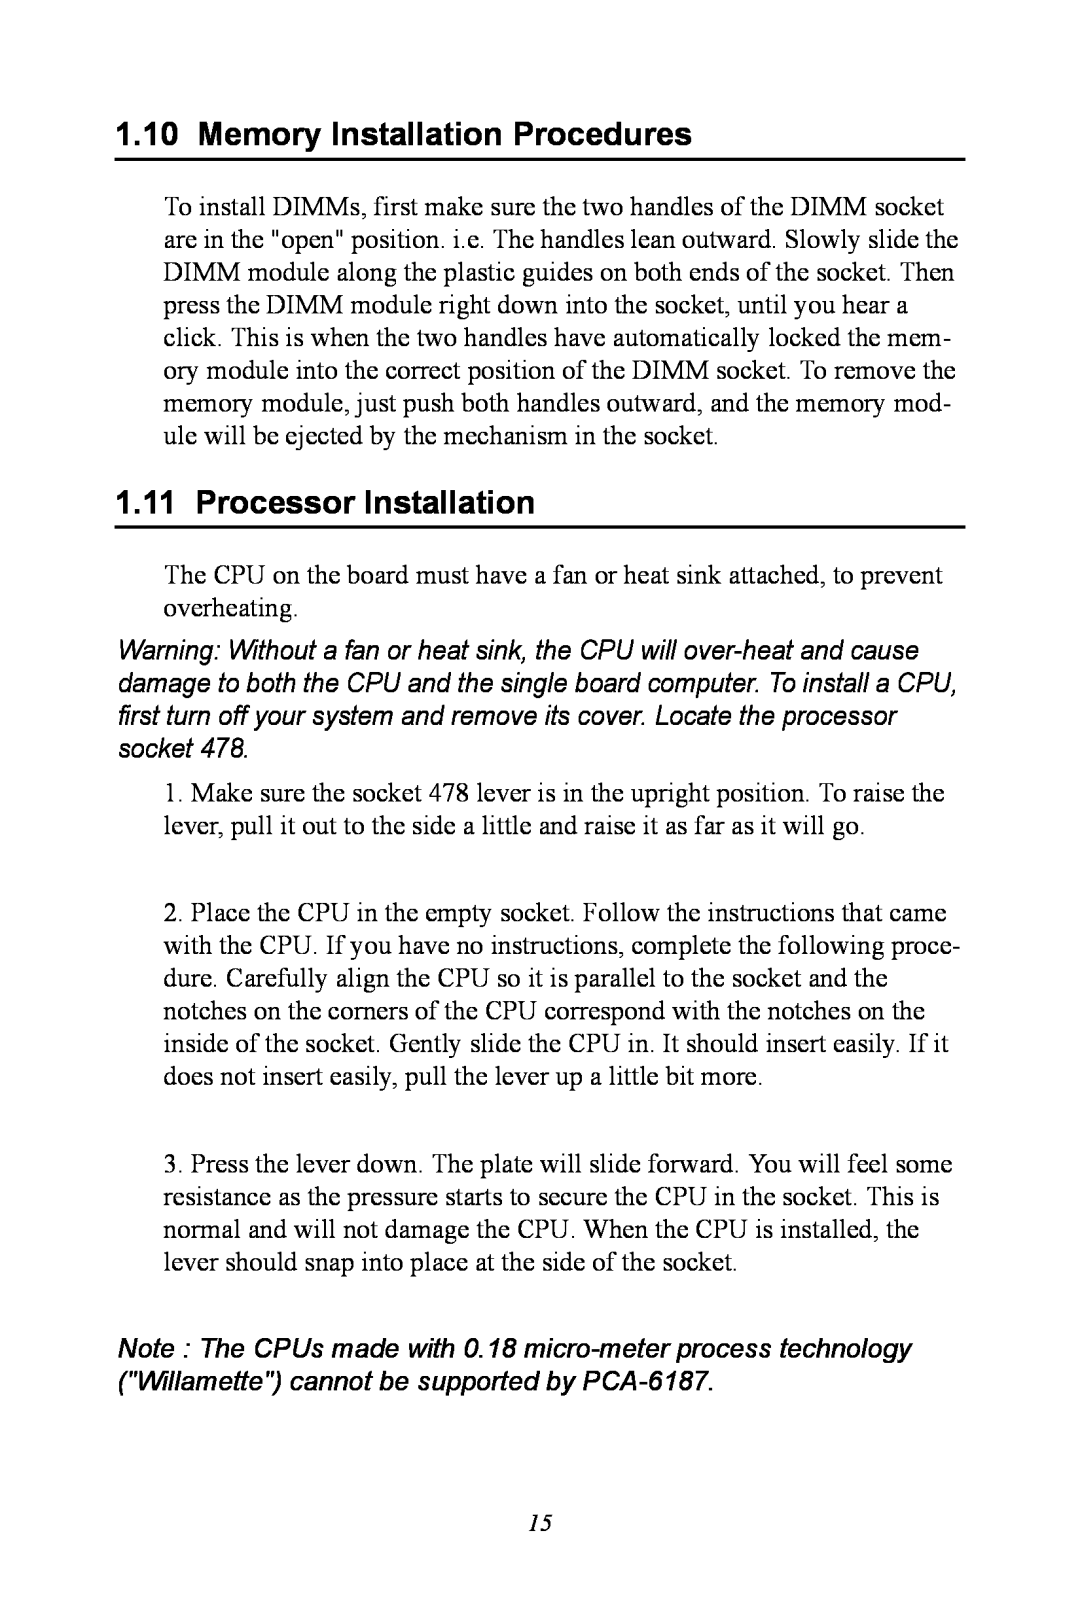 Advantech PCA-6187 user manual Memory Installation Procedures, Processor Installation 